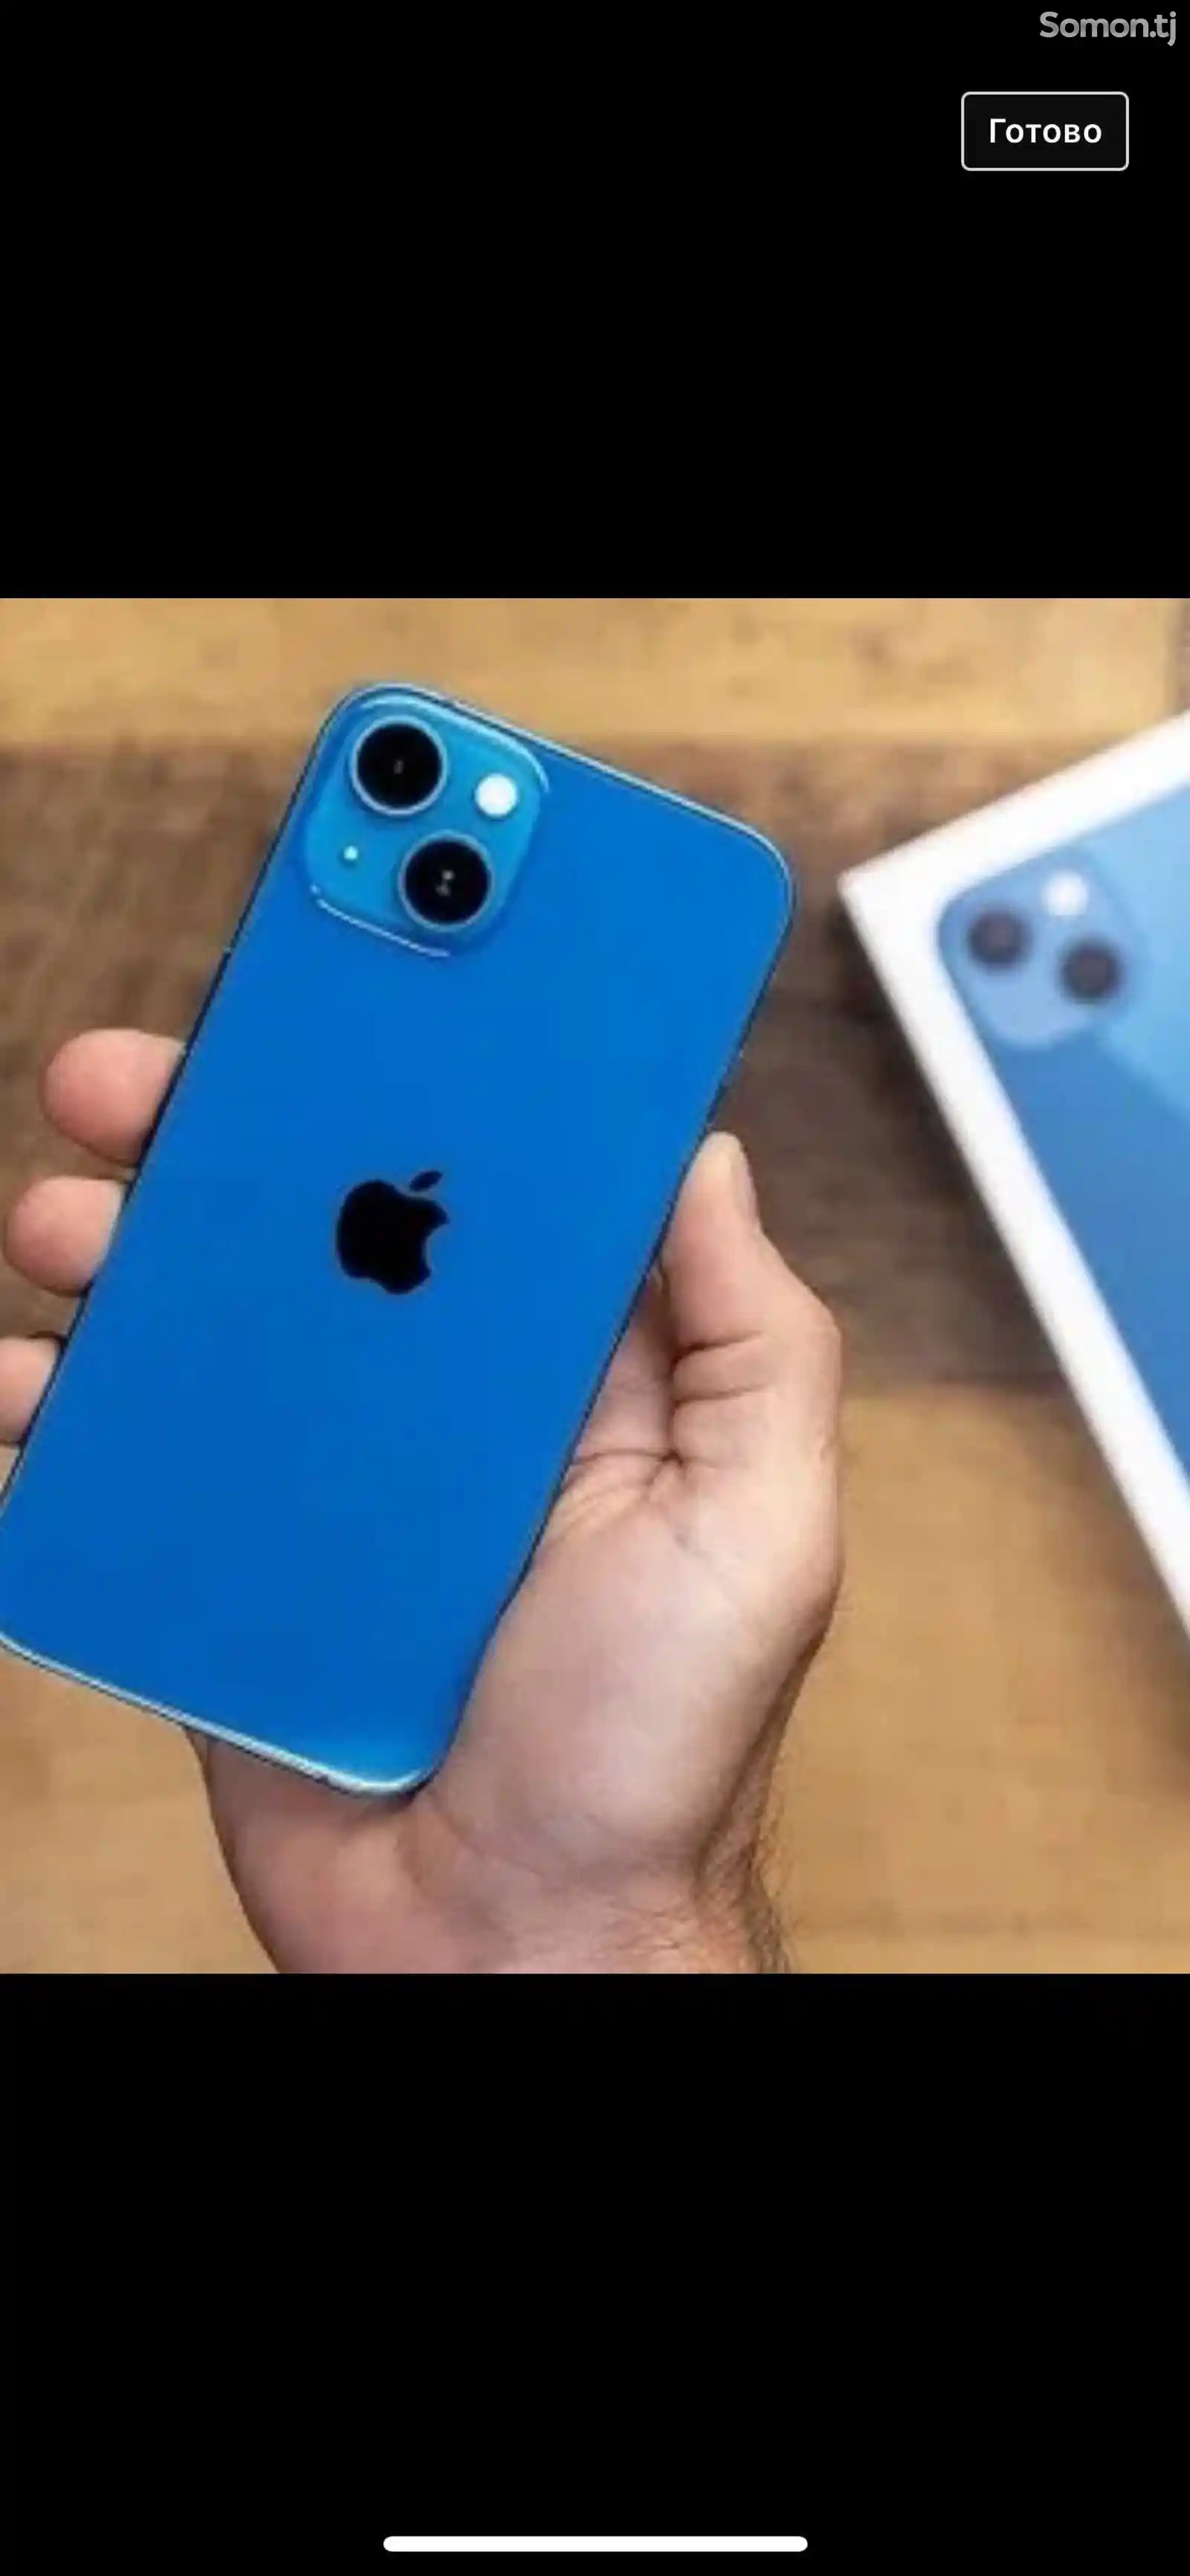 Apple iPhone 13, 128 gb, Blue